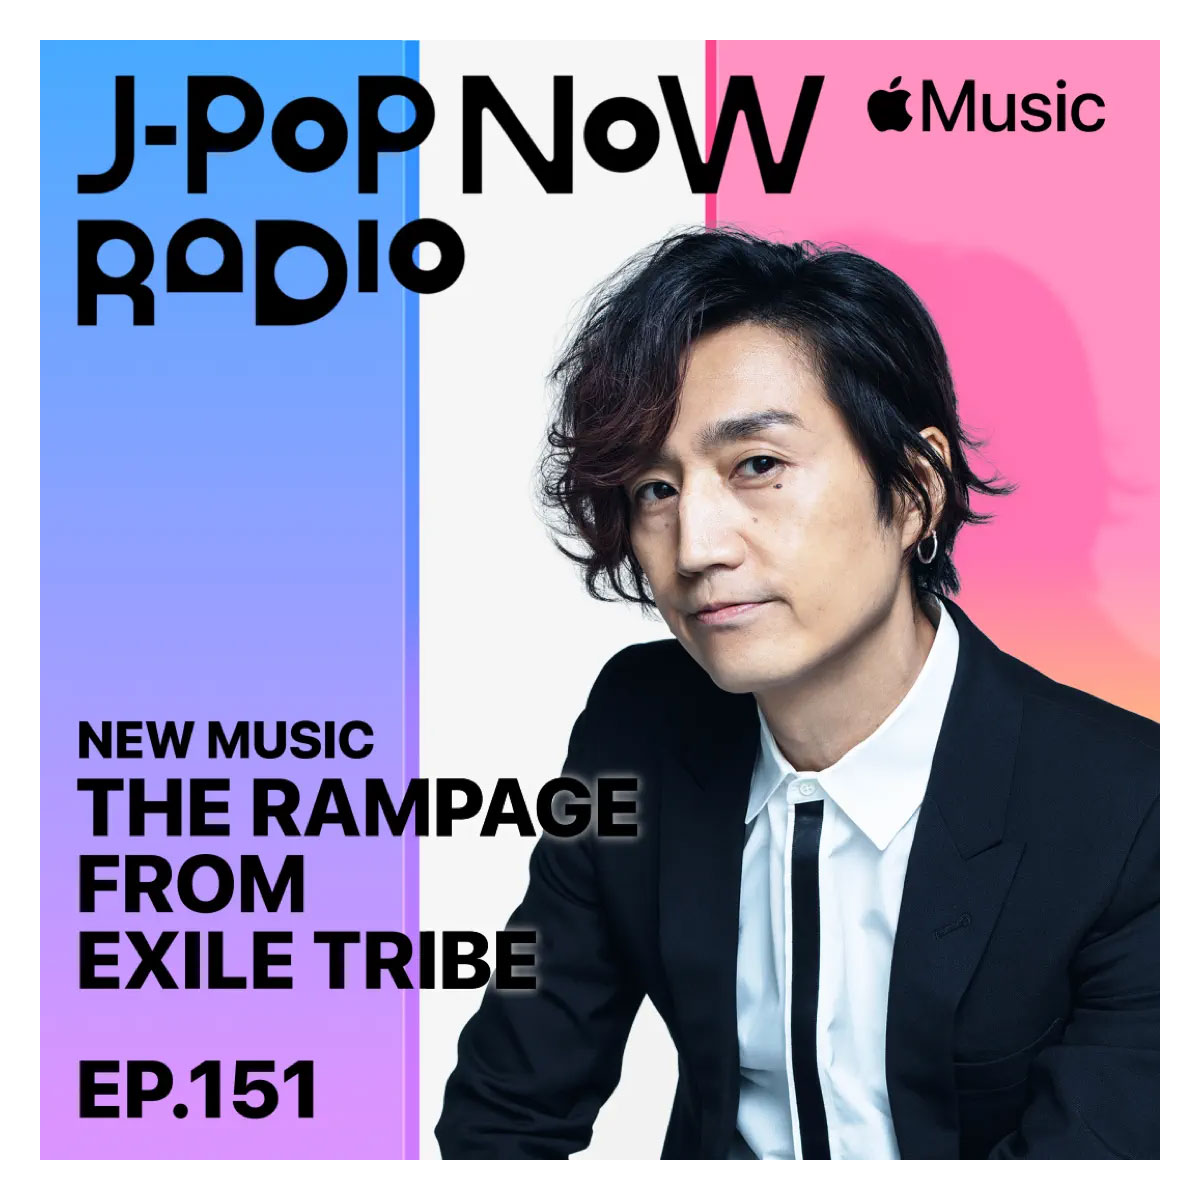 J-Pop Now Radio with Kentaro Ochiai 特集：THE RAMPAGE from EXILE TRIBE